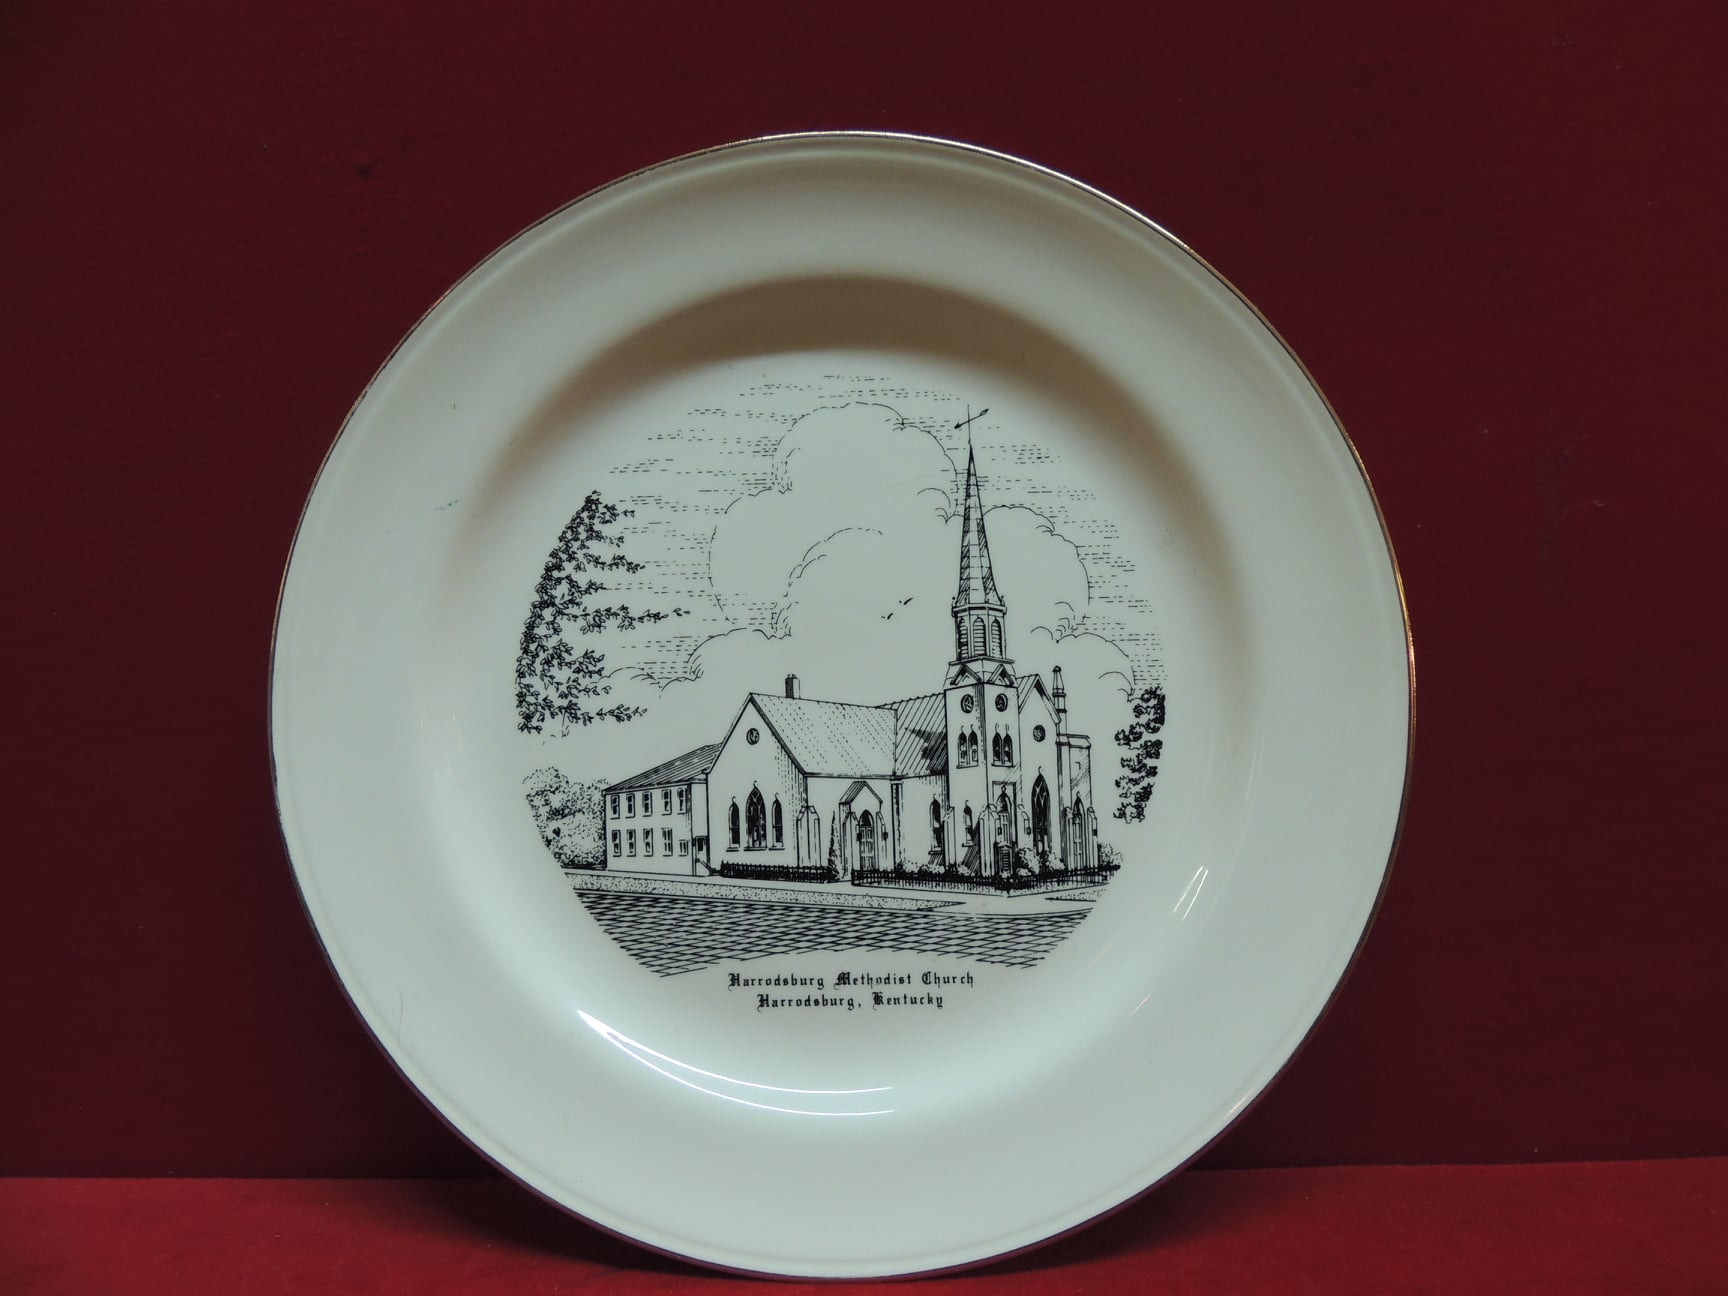 Harrodsburg Sestercentennial: Harrodsburg Commemorative Plates